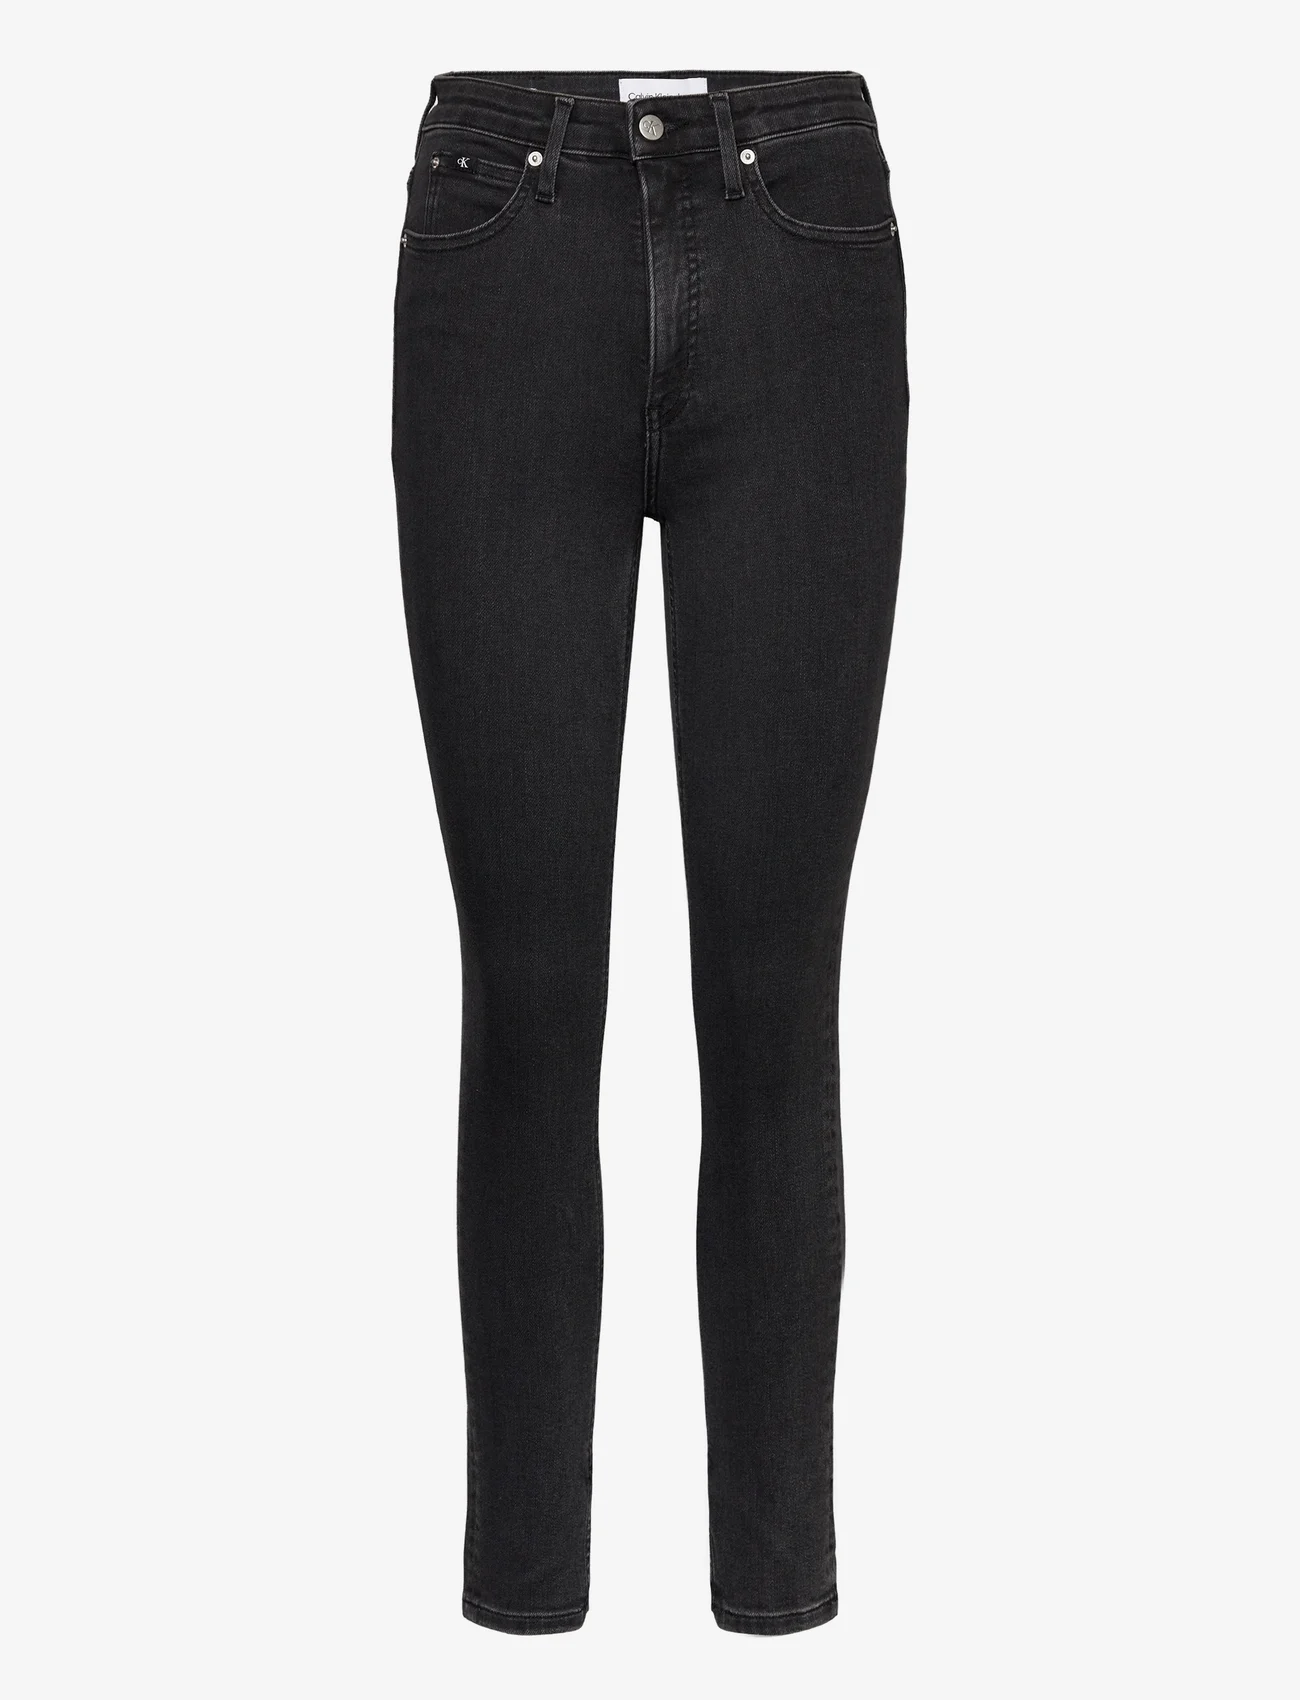 Calvin Klein Jeans - HIGH RISE SKINNY - liibuvad teksad - denim black - 0